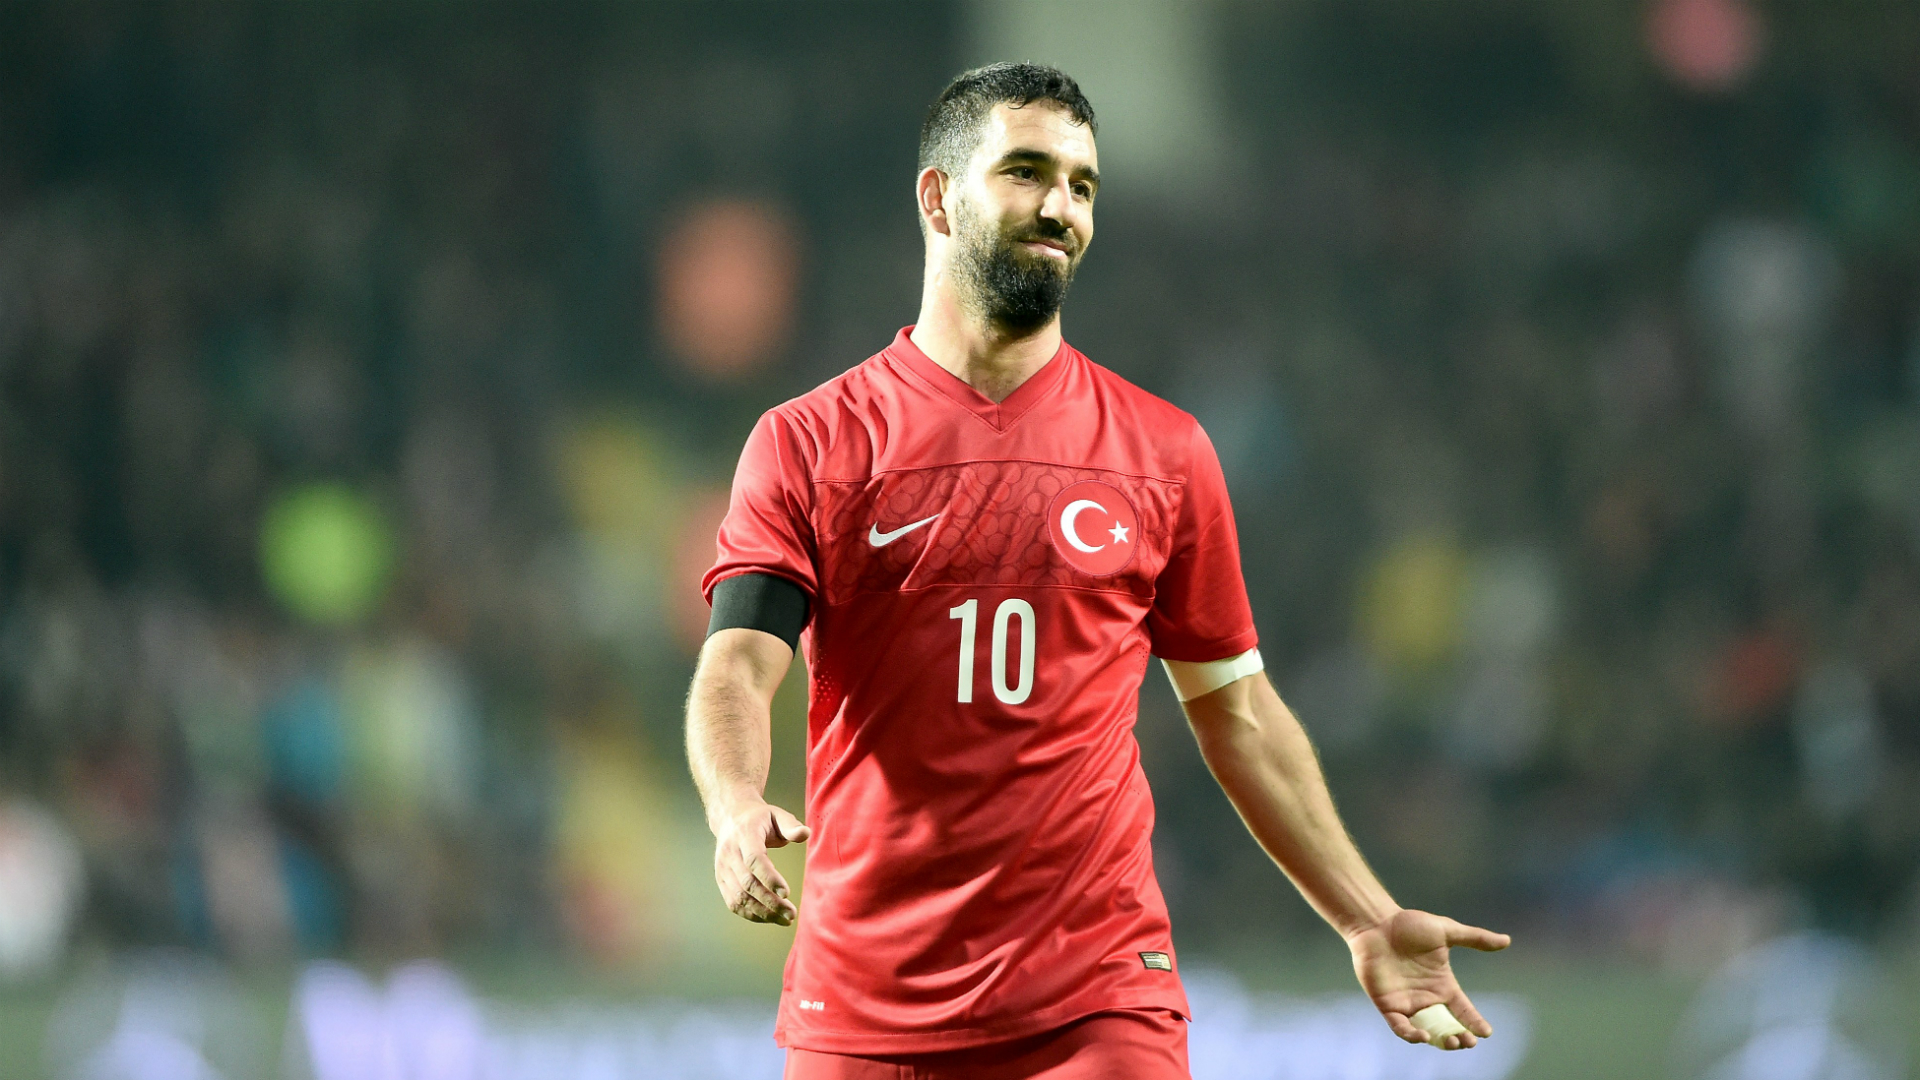 Arda Turan scores first goal after returning to Turkey